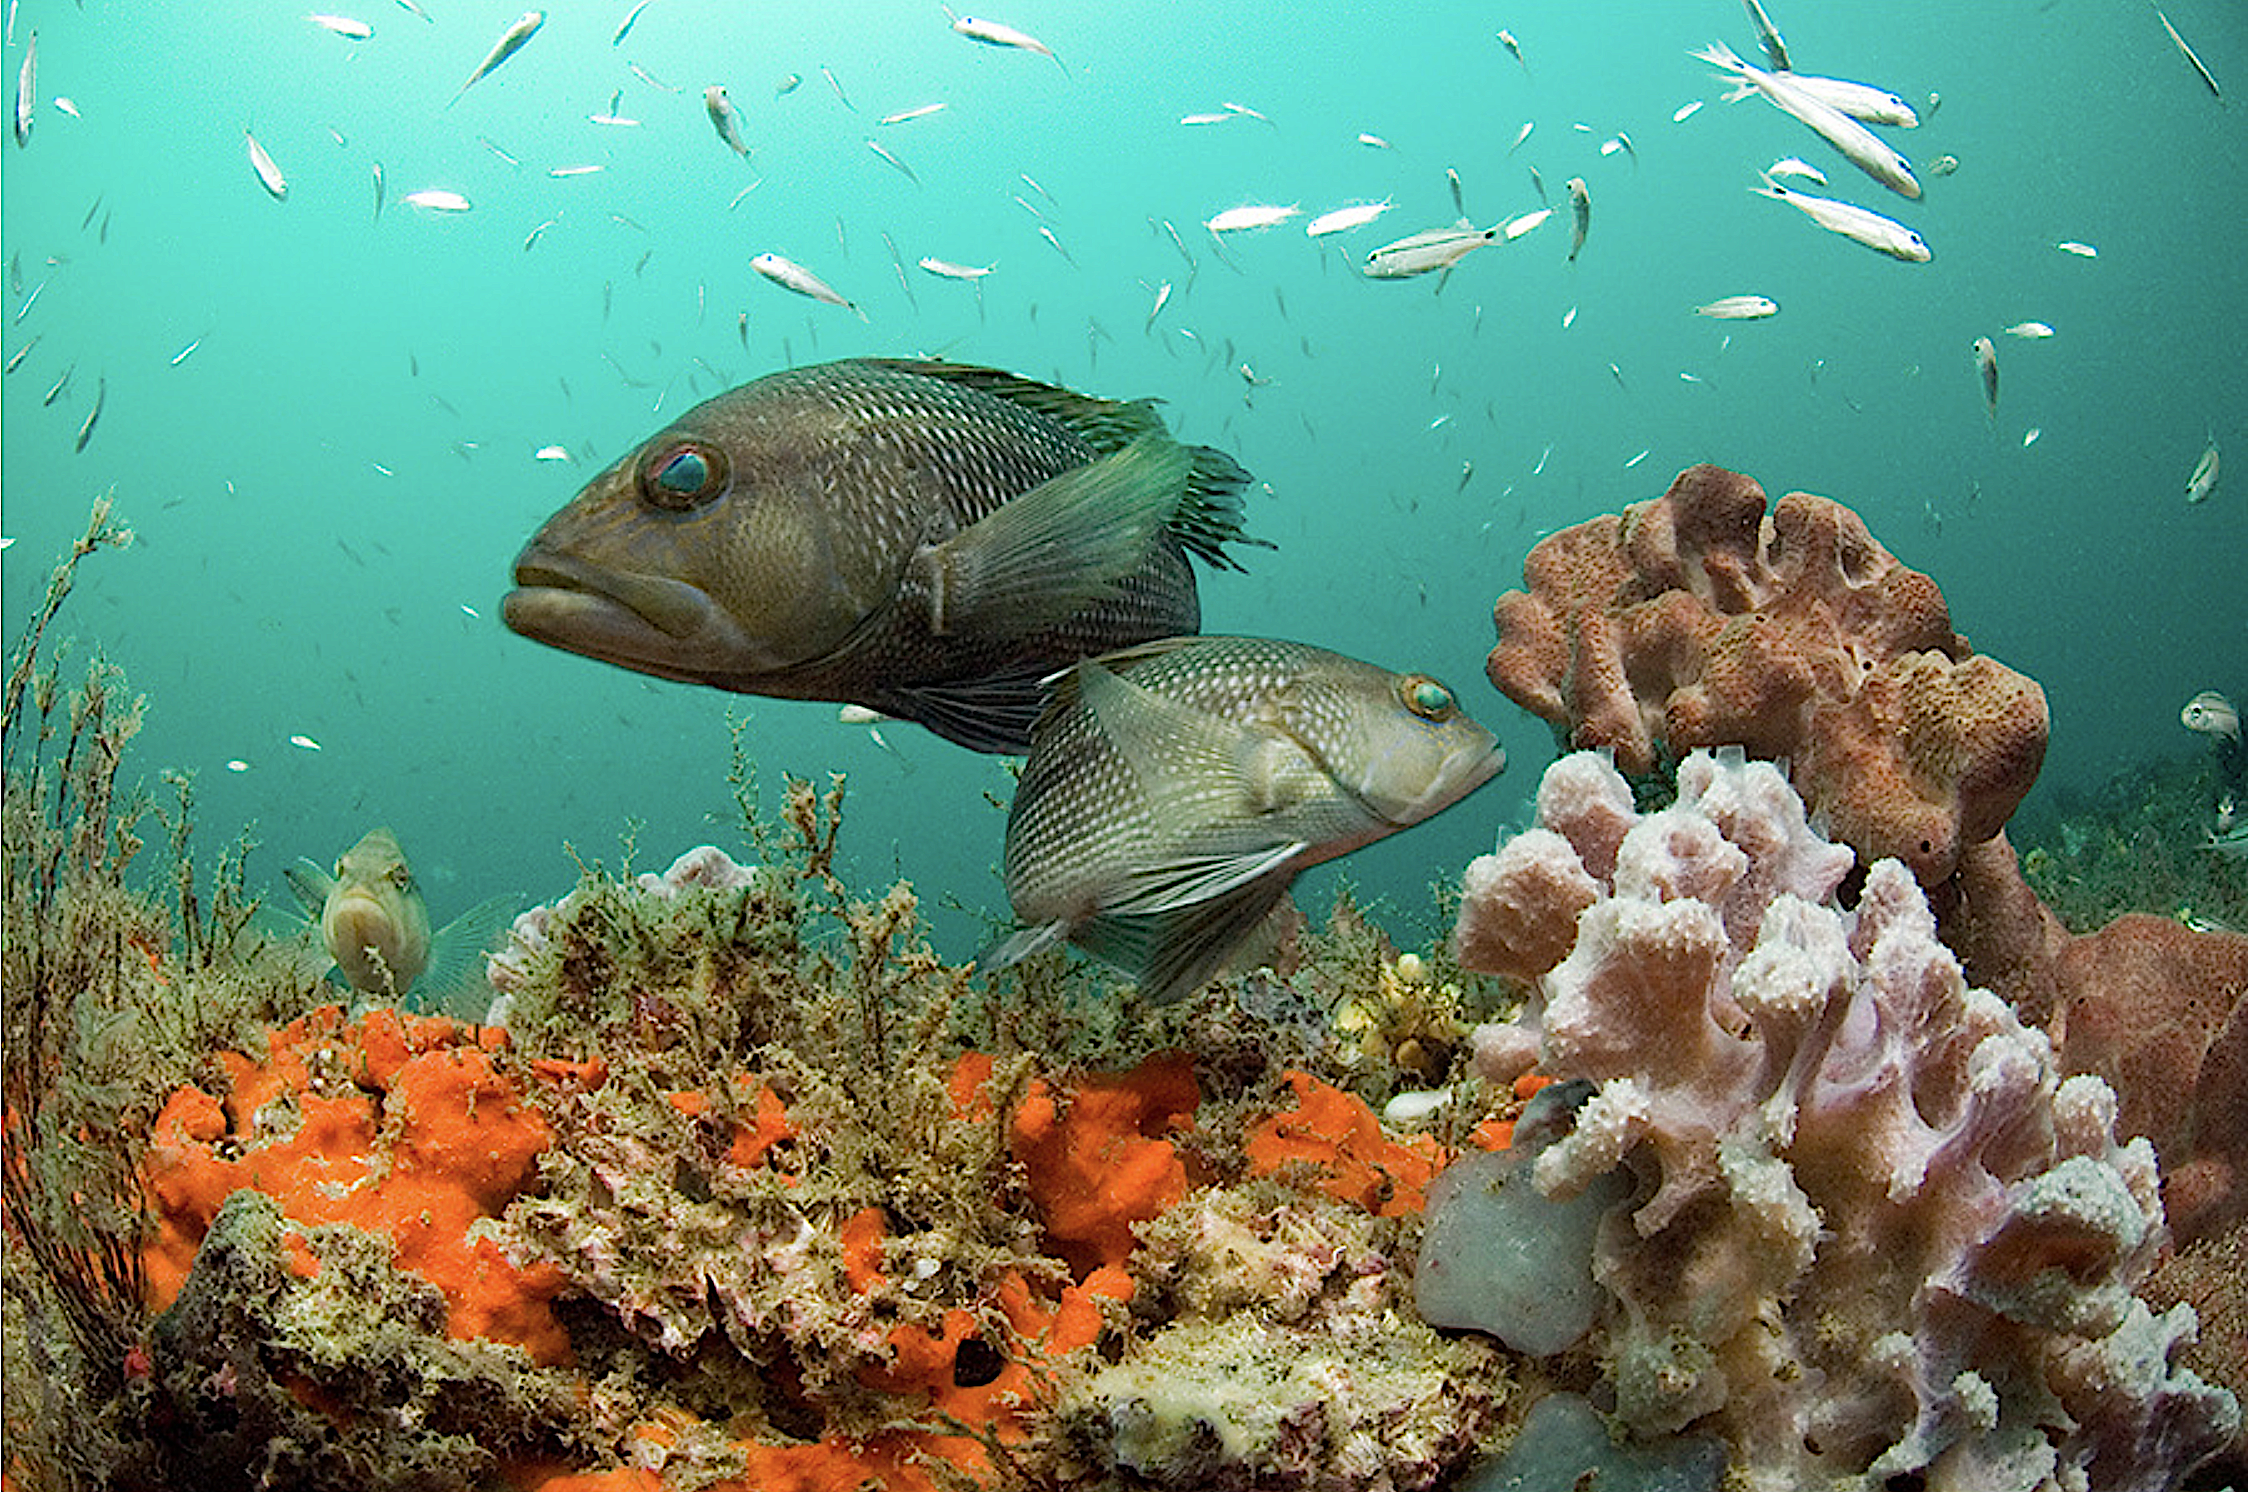 image: black sea bass on a reef.